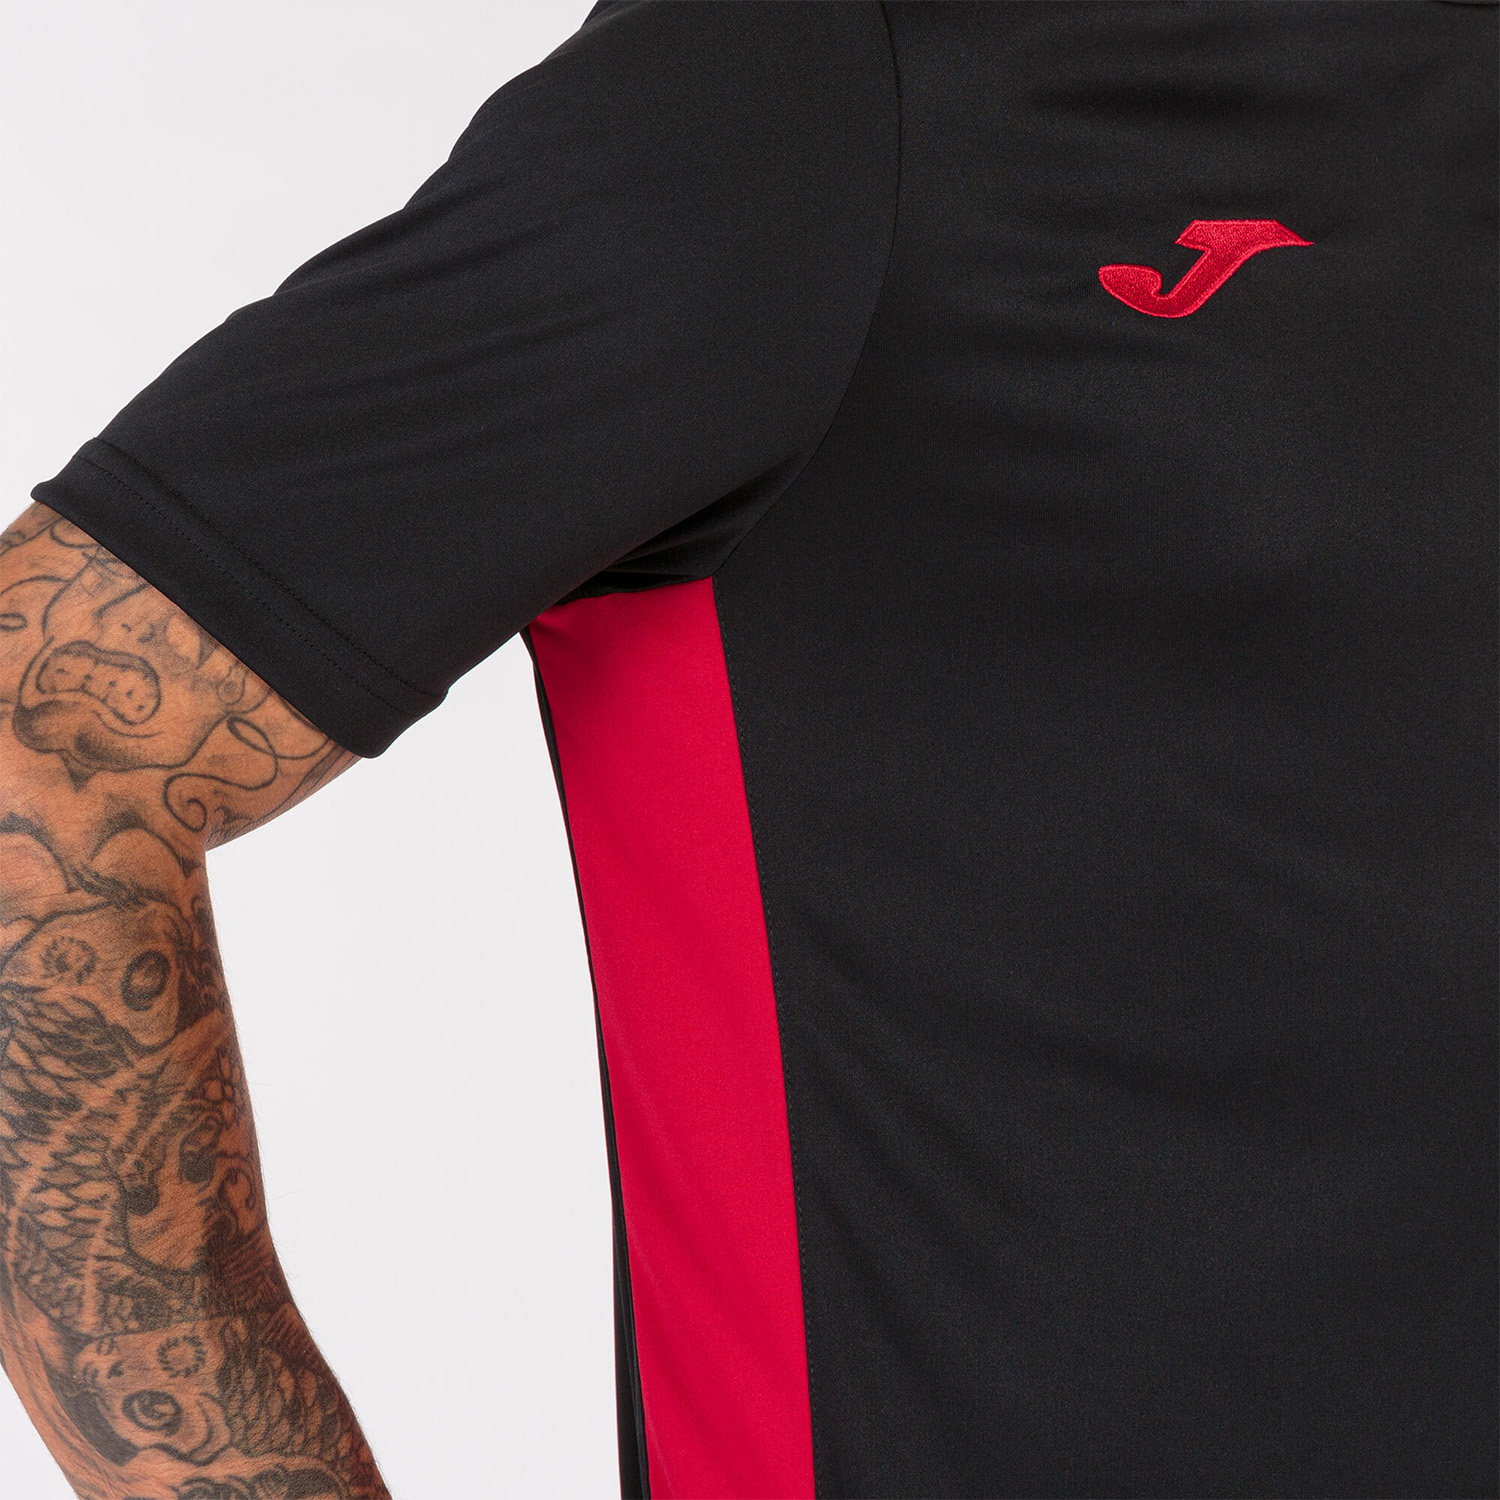 Joma Championship VI T-Shirt - Black/Red